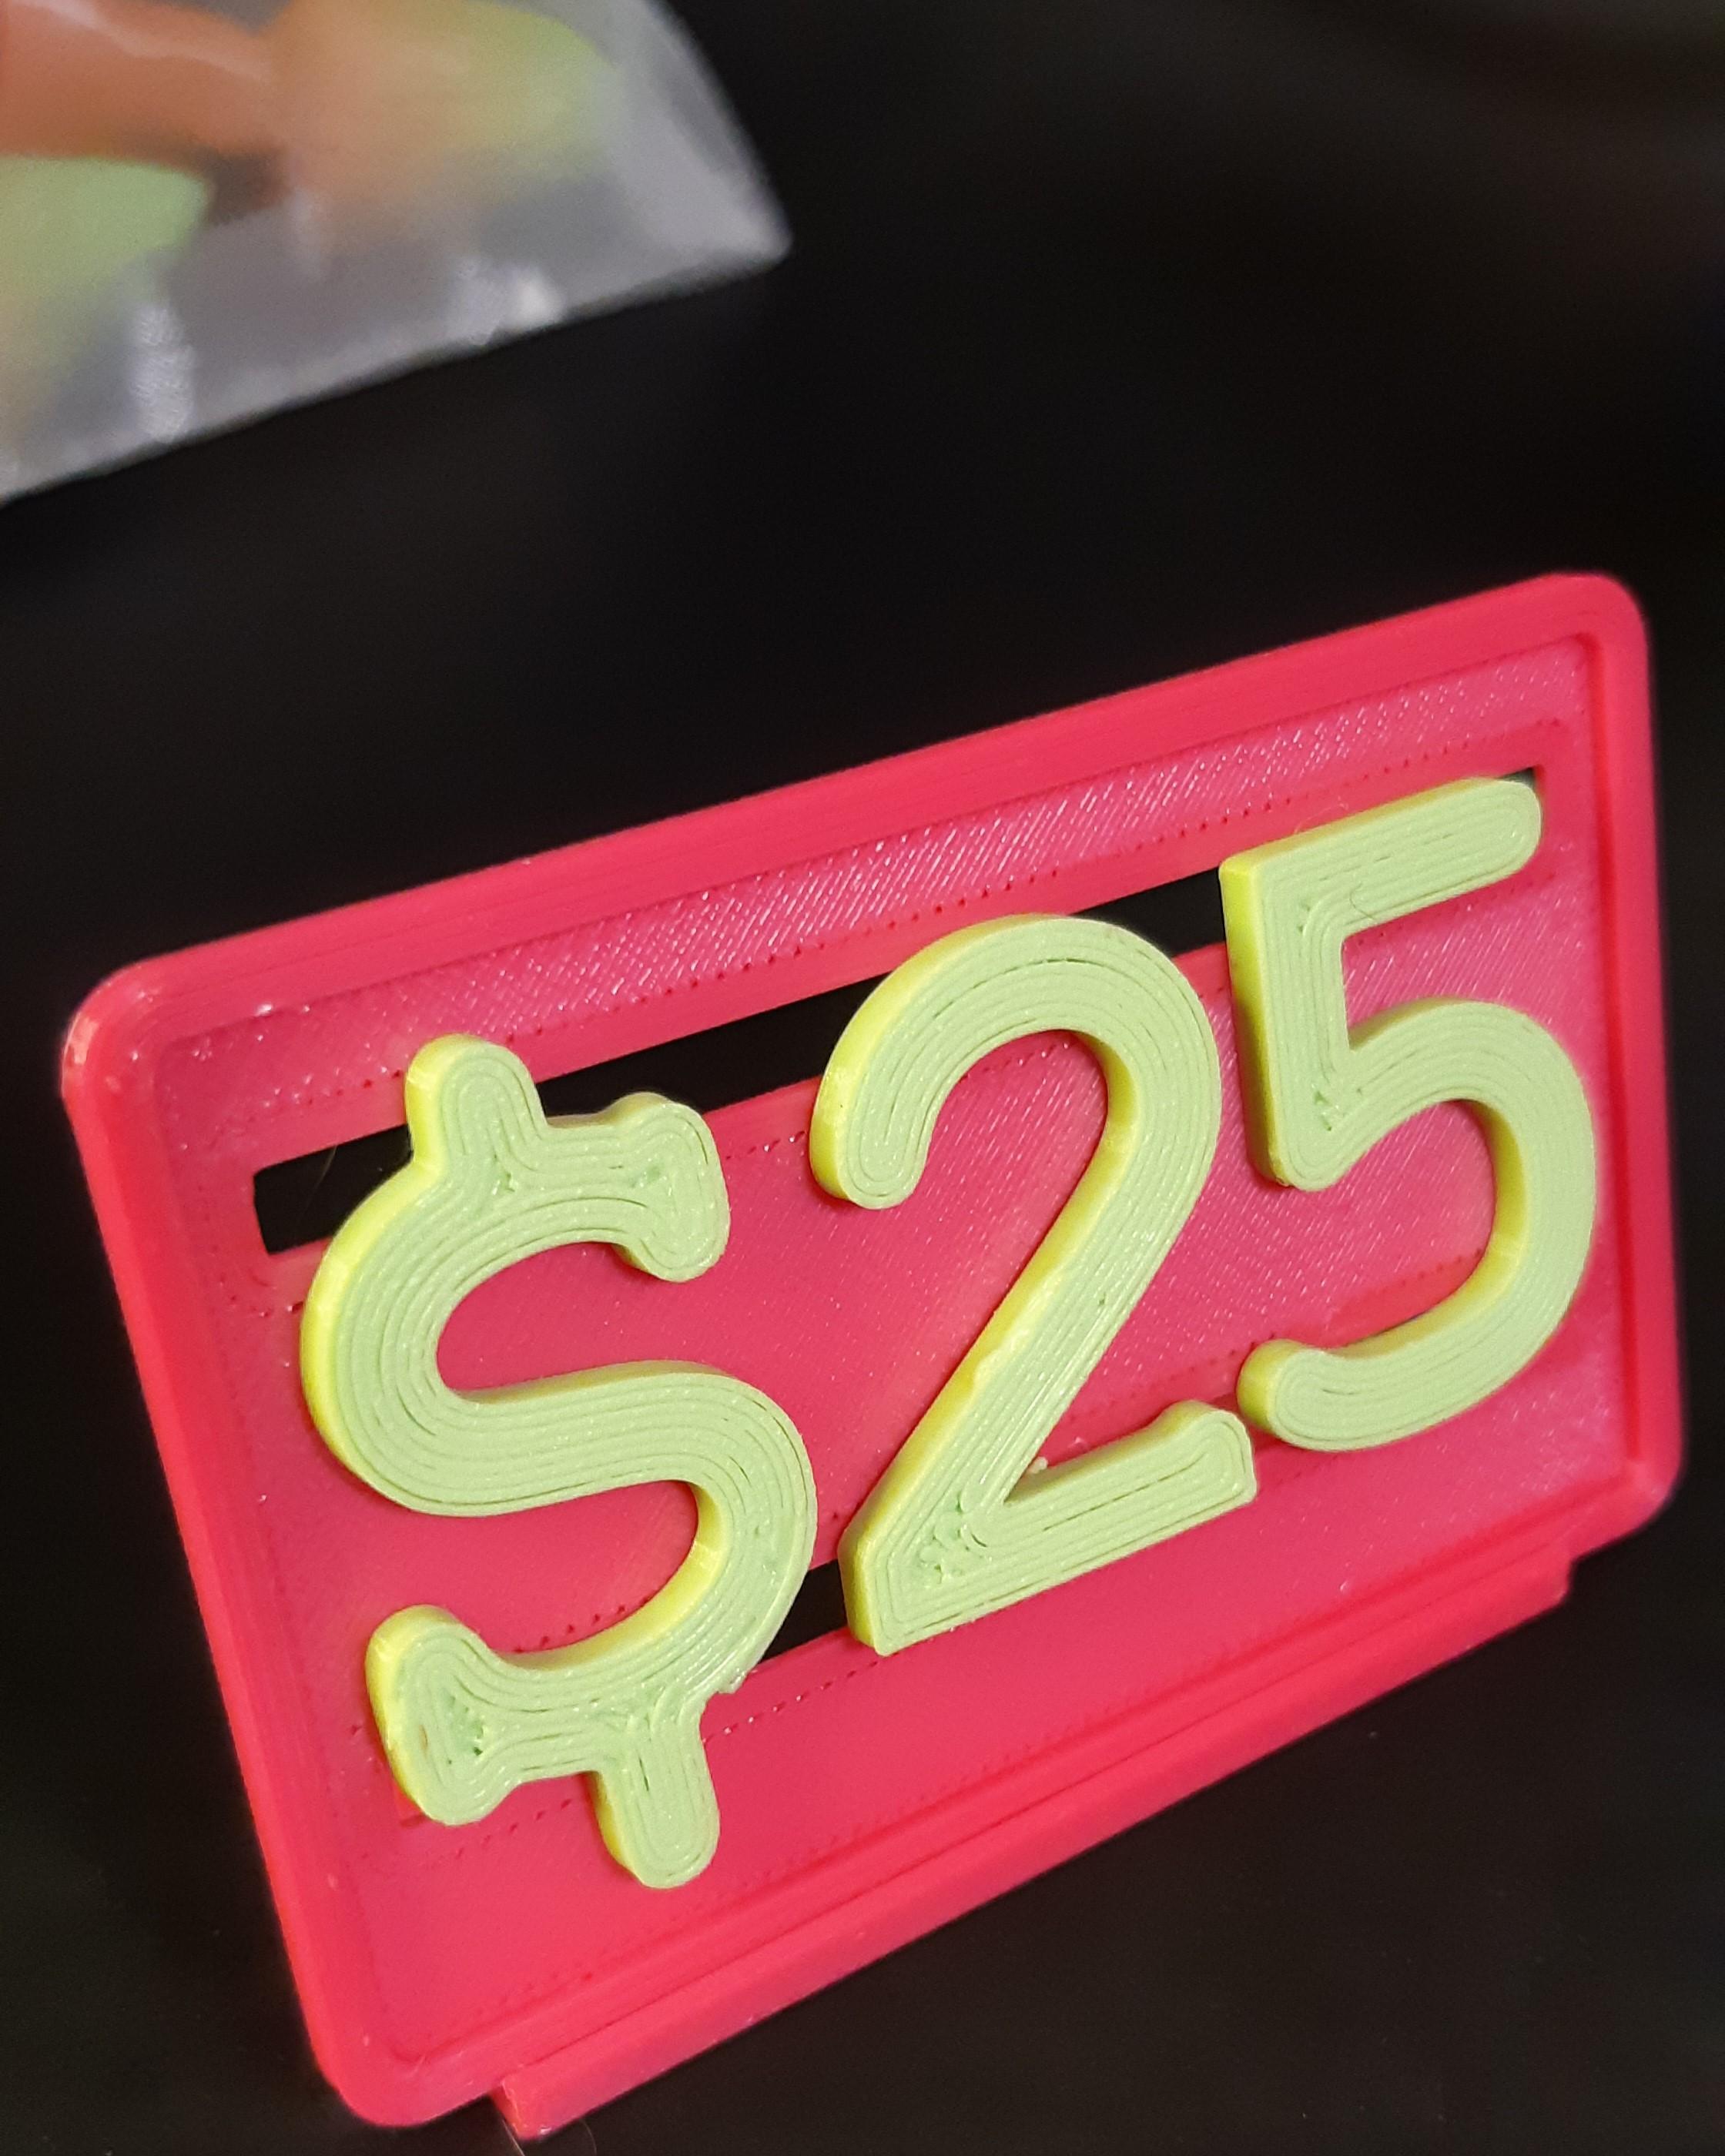 Price Tag - Customizable 3d model